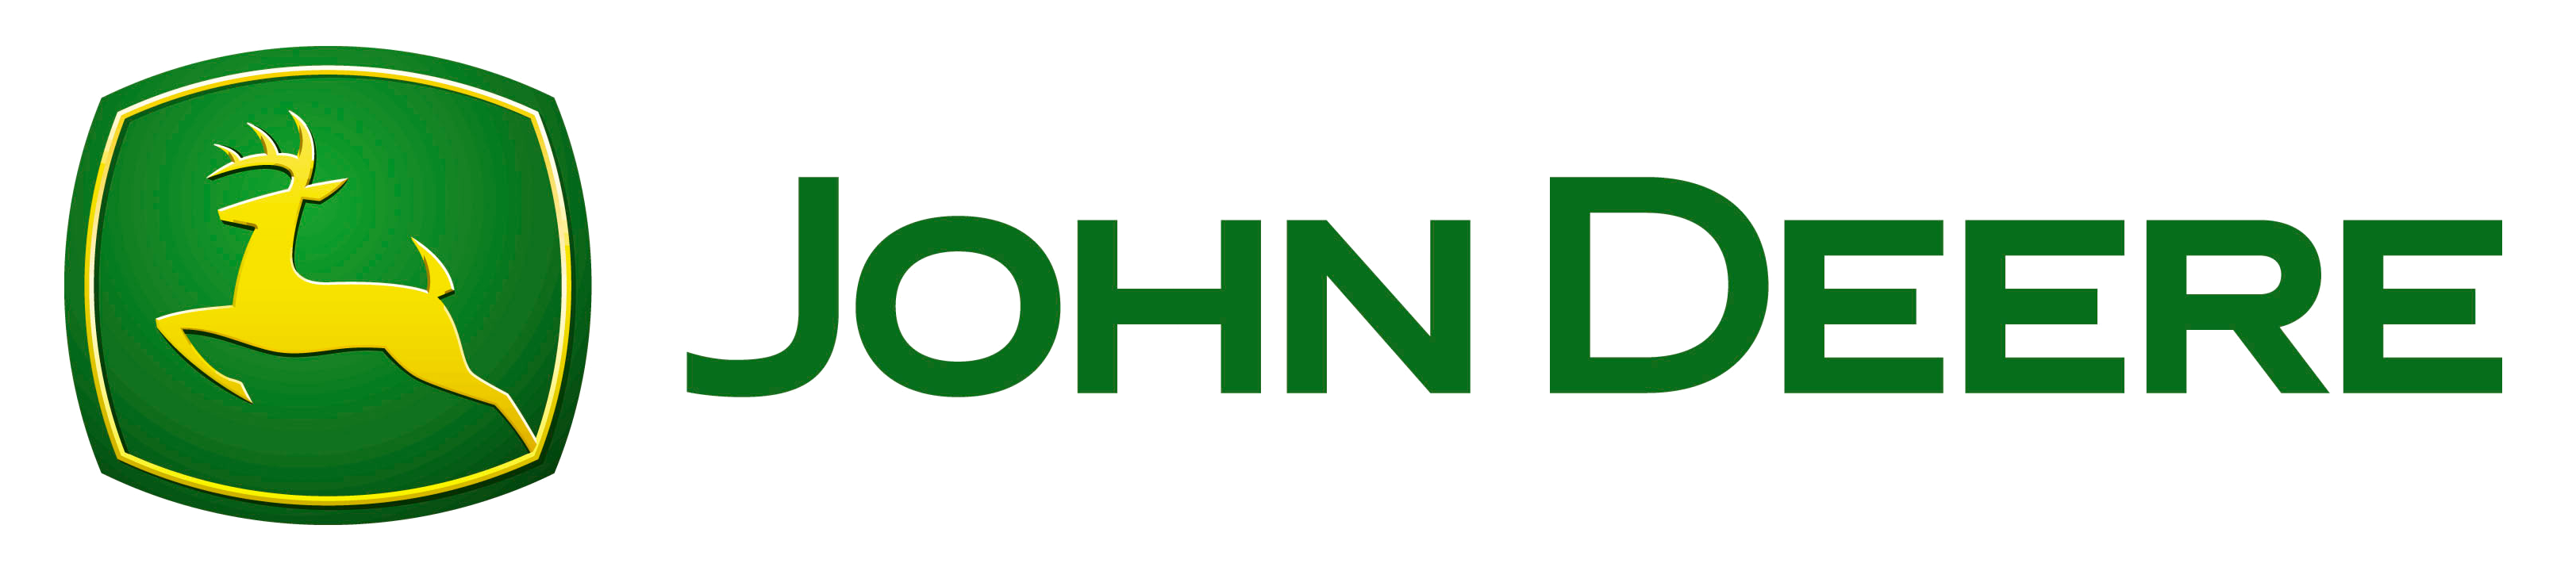 john-deere-logo-png-transparent-1